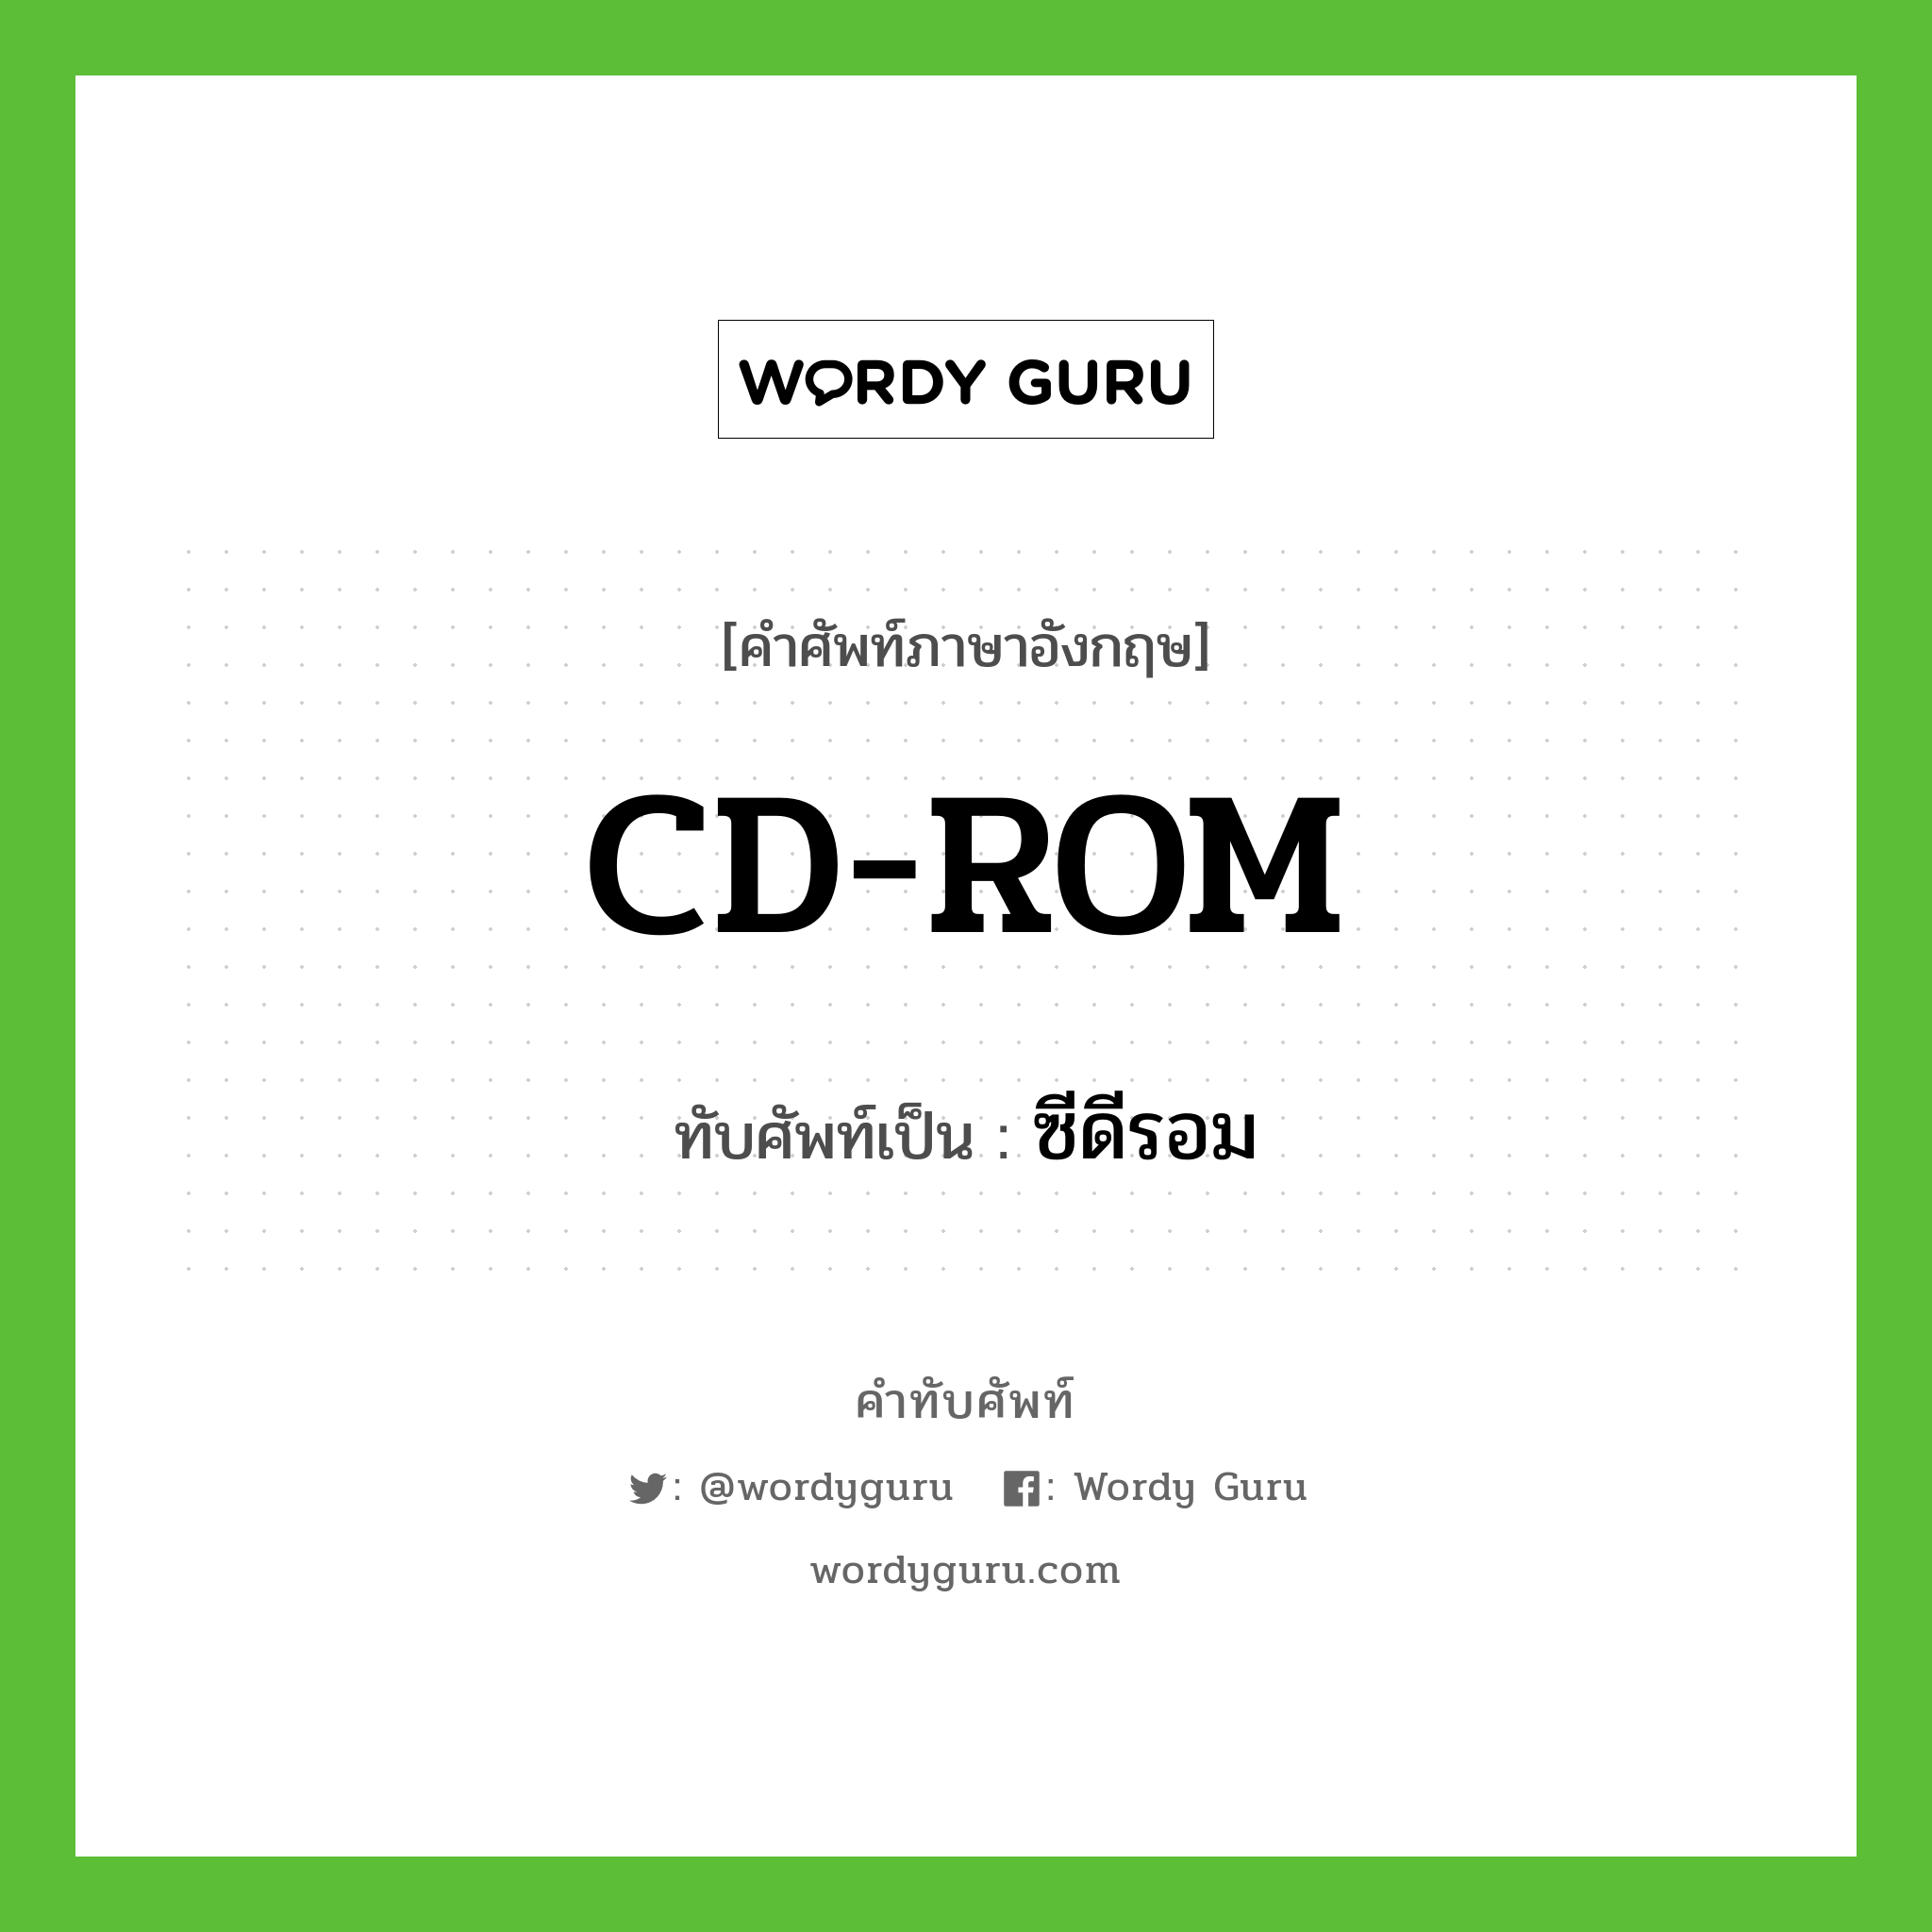 CD-ROM เขียนเป็นคำไทยว่าอะไร?, คำศัพท์ภาษาอังกฤษ CD-ROM ทับศัพท์เป็น ซีดีรอม